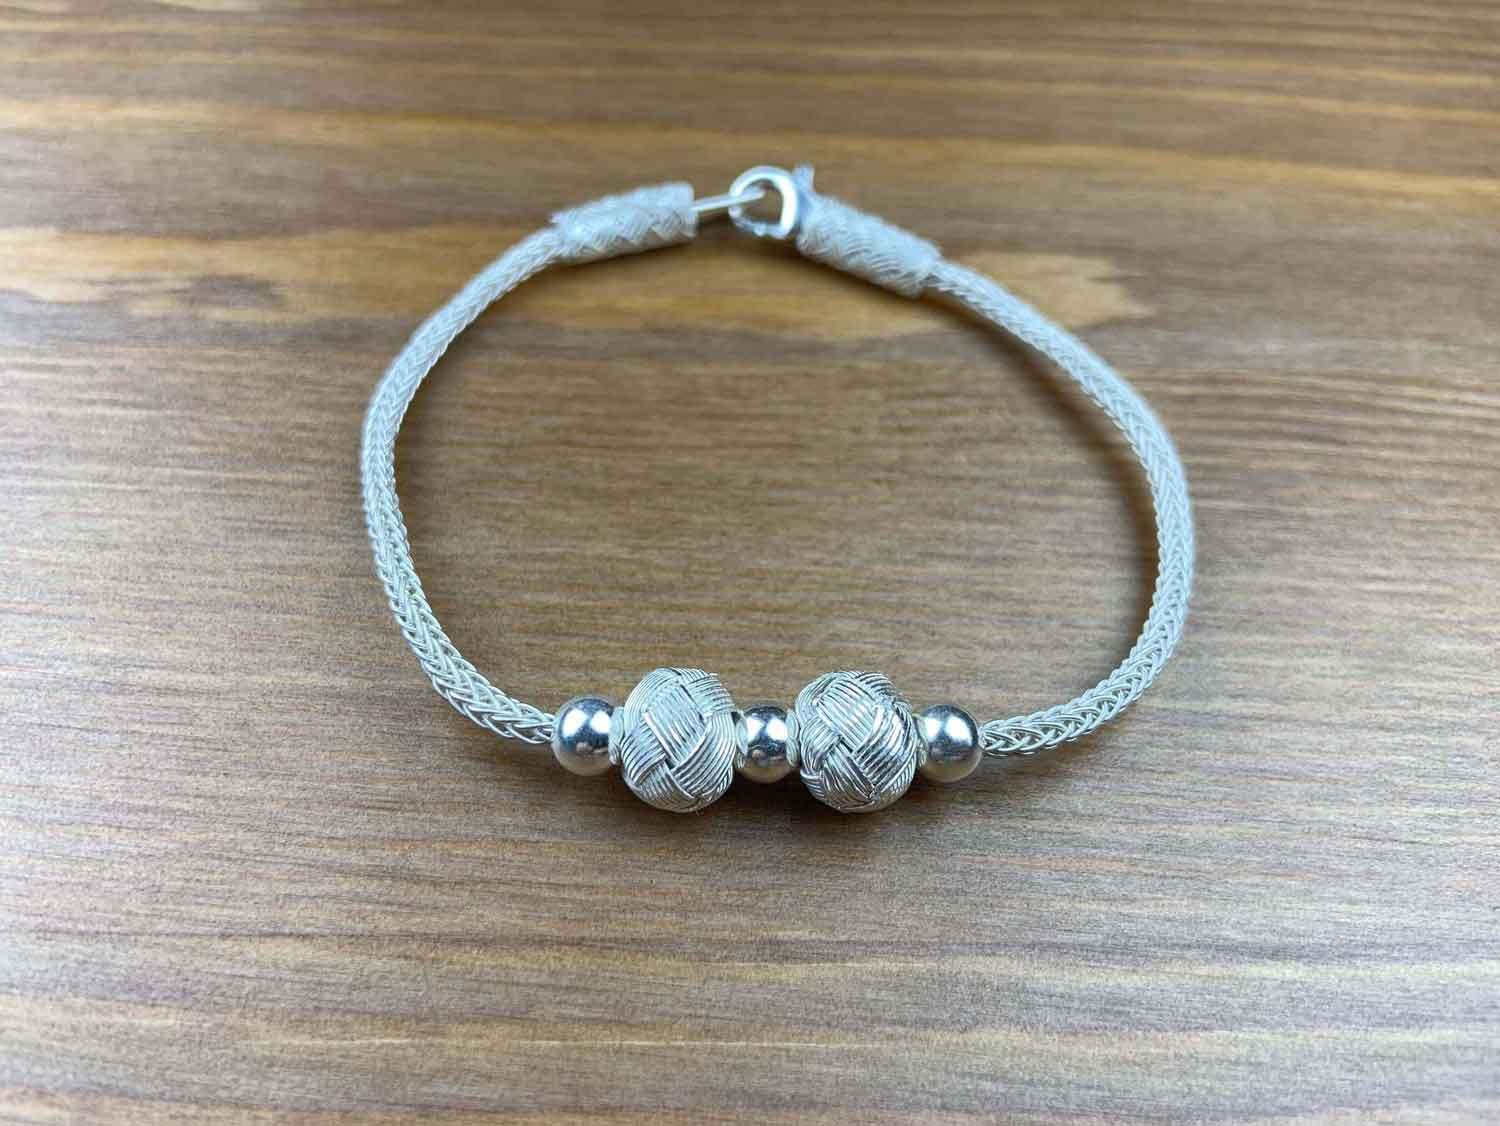 Unique BRIDESMAID BRACELET, Handmade Silver, Unique Design Band, Bride Gift Bracelet, Silver Beads, Braided Bracelet available at Moyoni Design